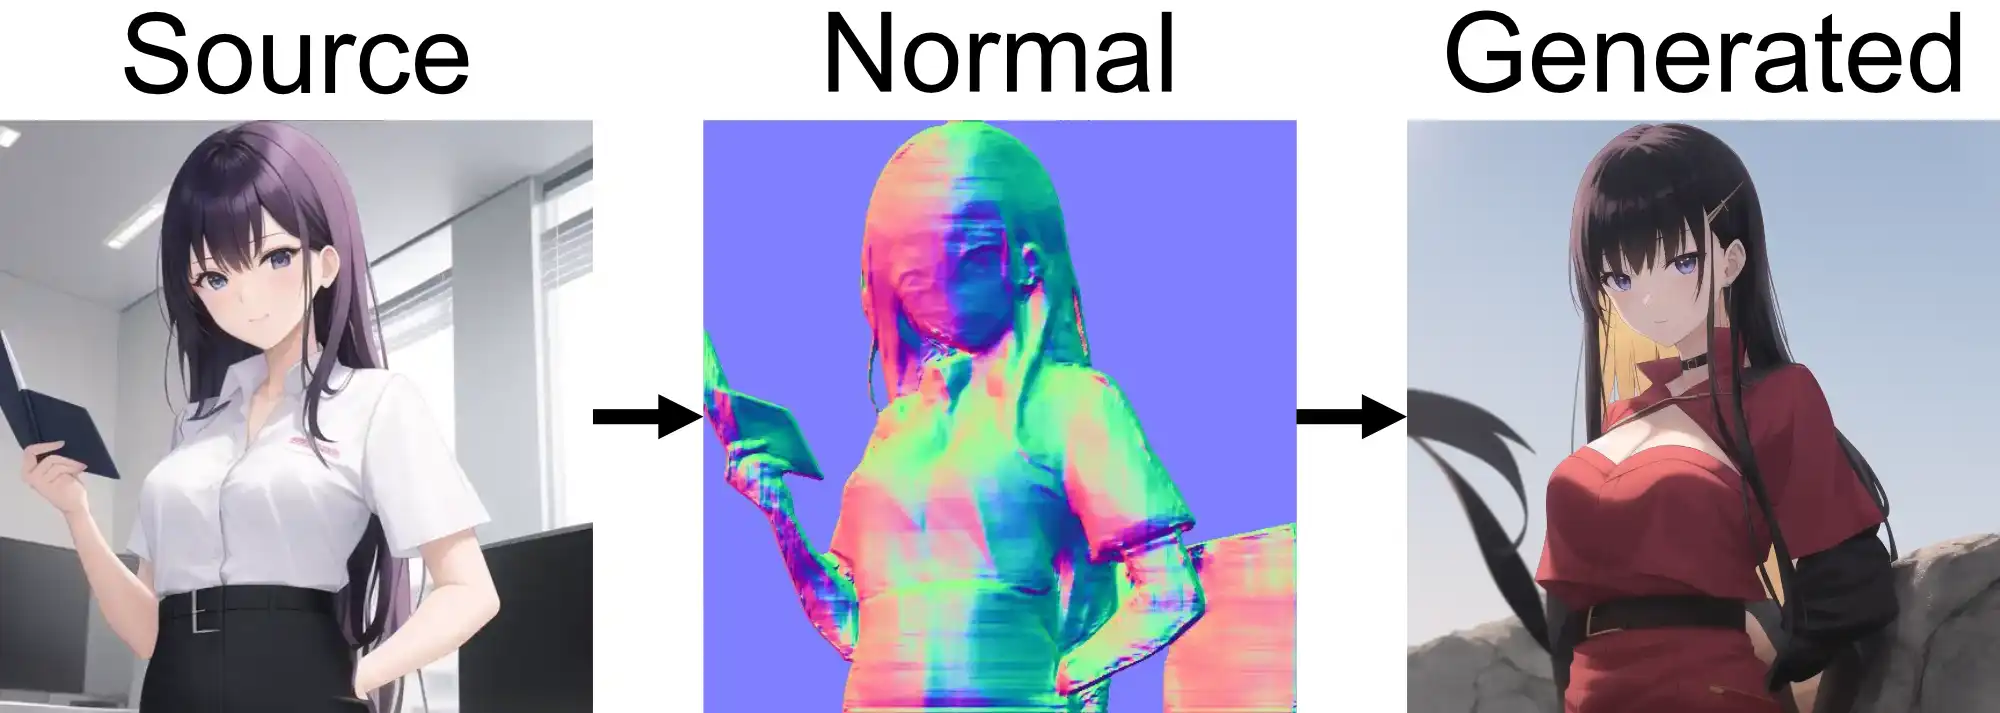 Normal model